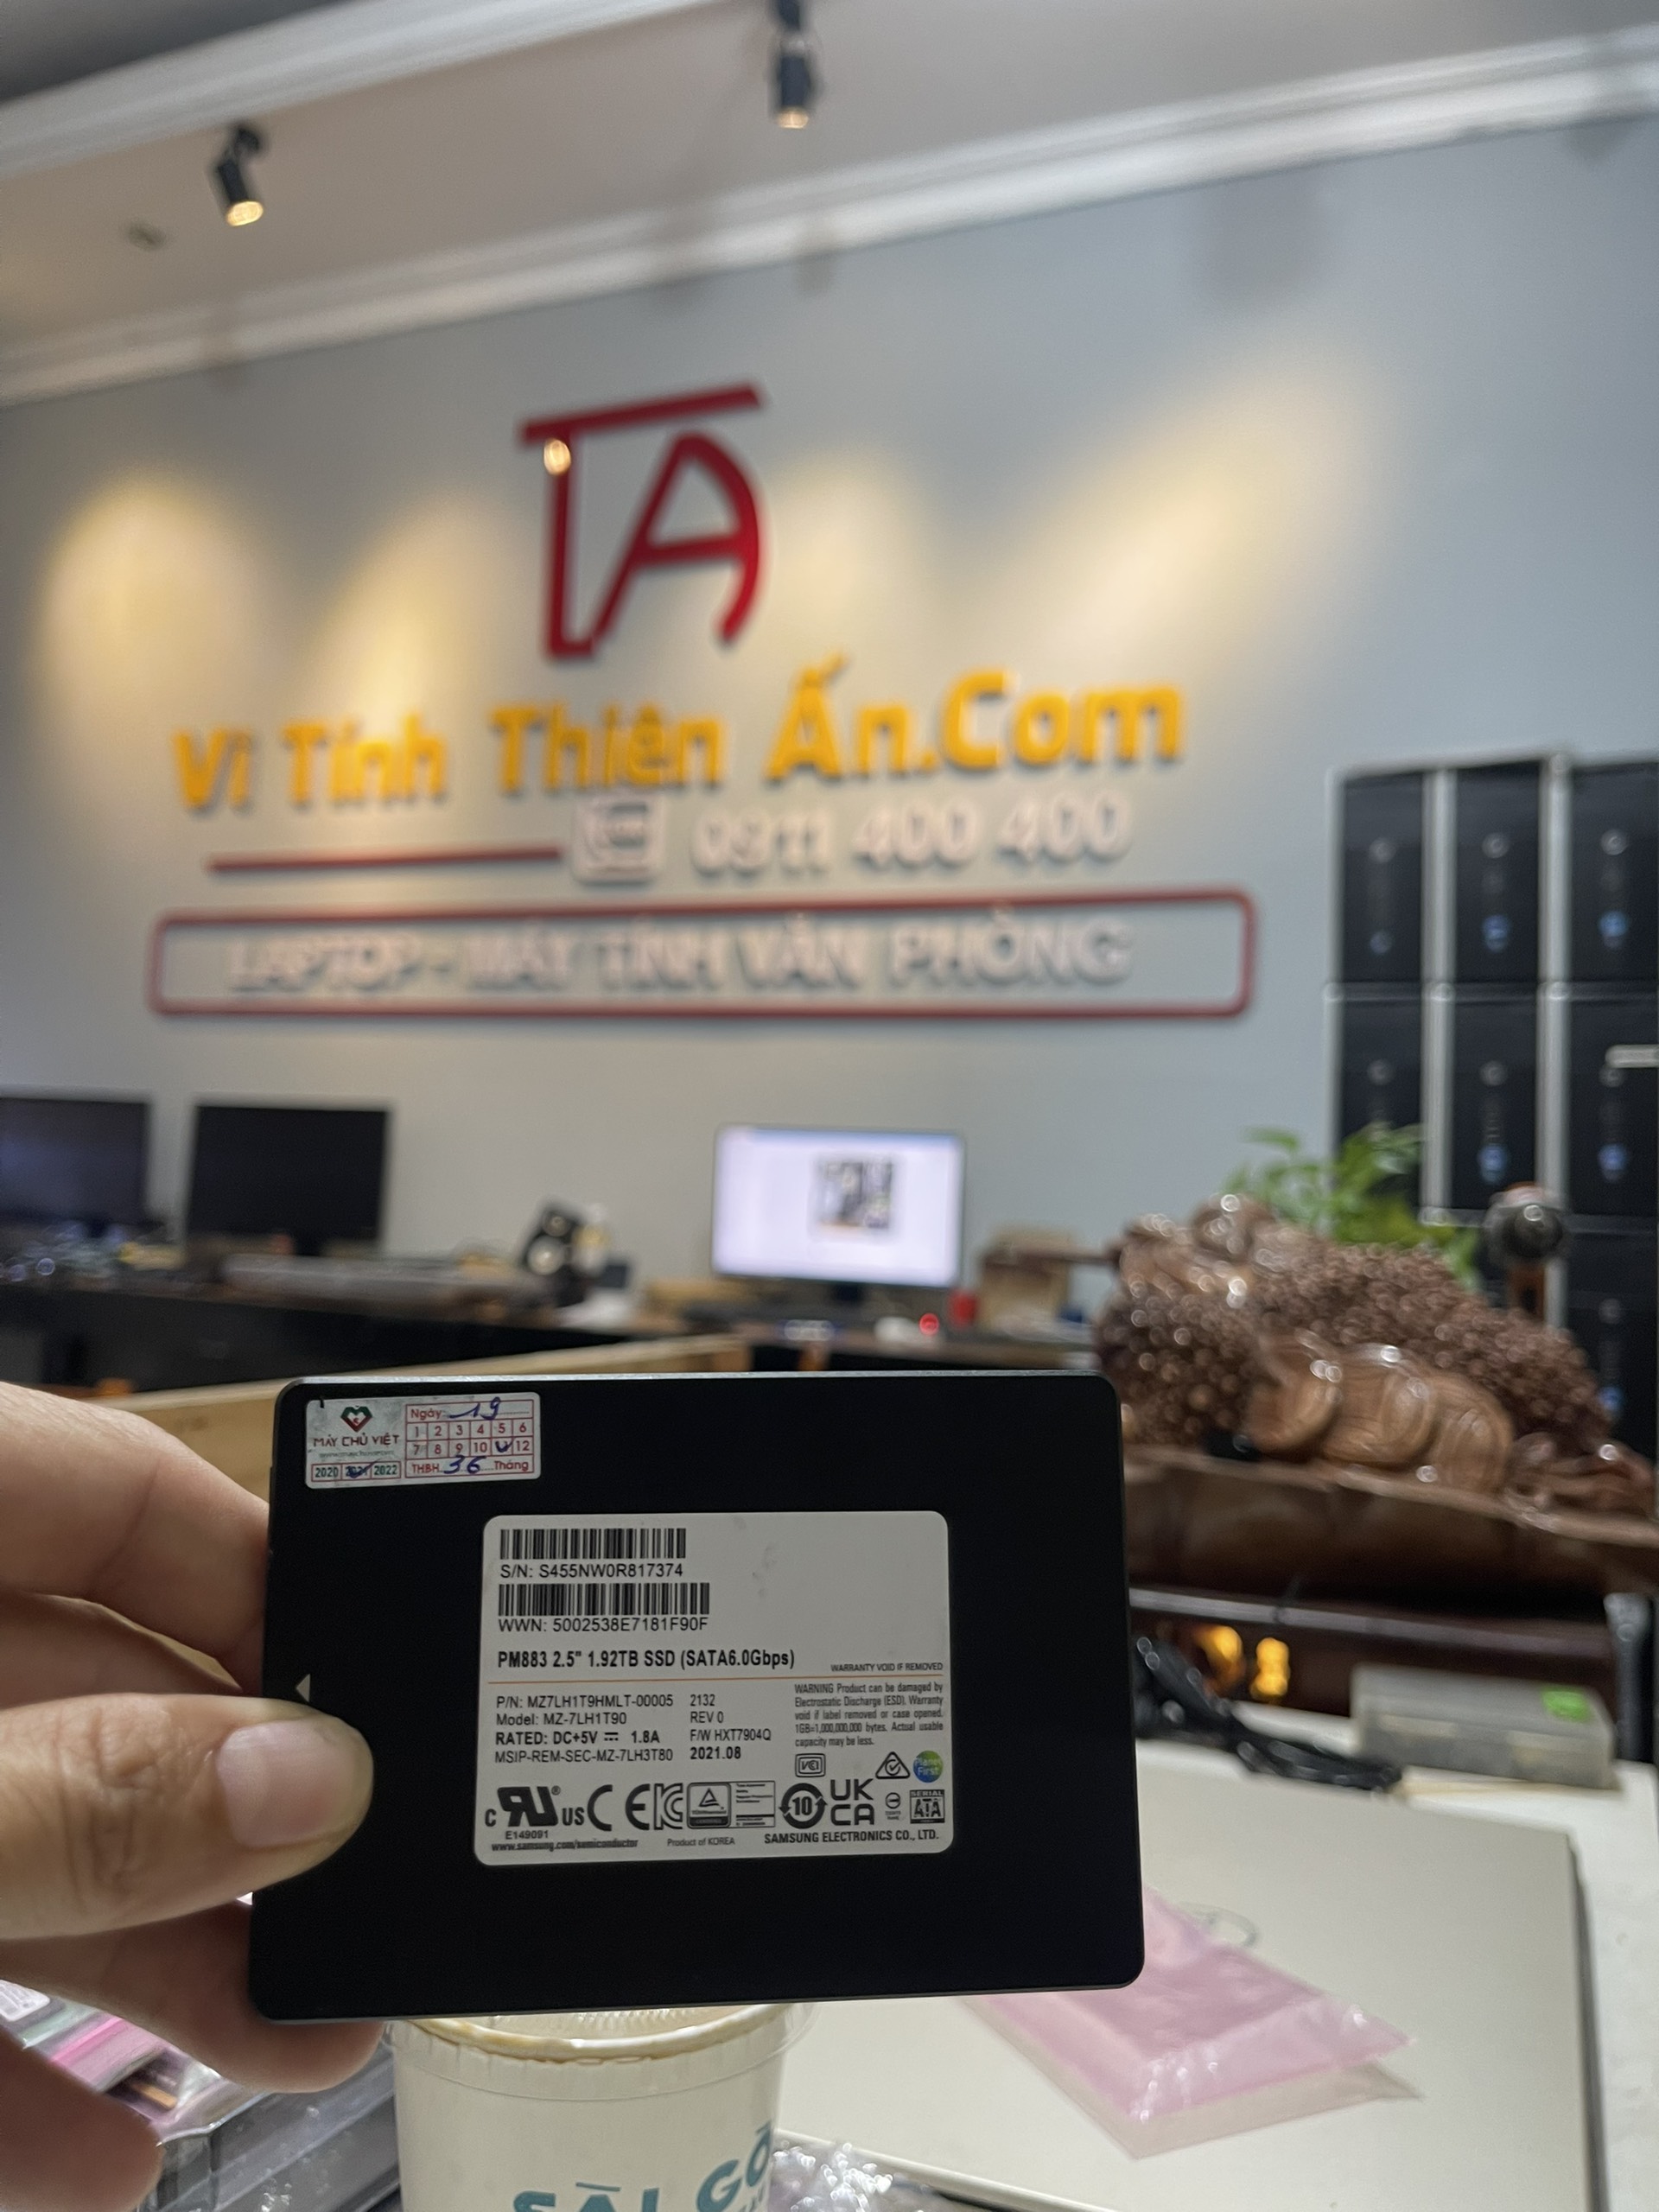 Ổ cứng SSD M2-PCIe 2TB WD Black SN770 NVMe 2280